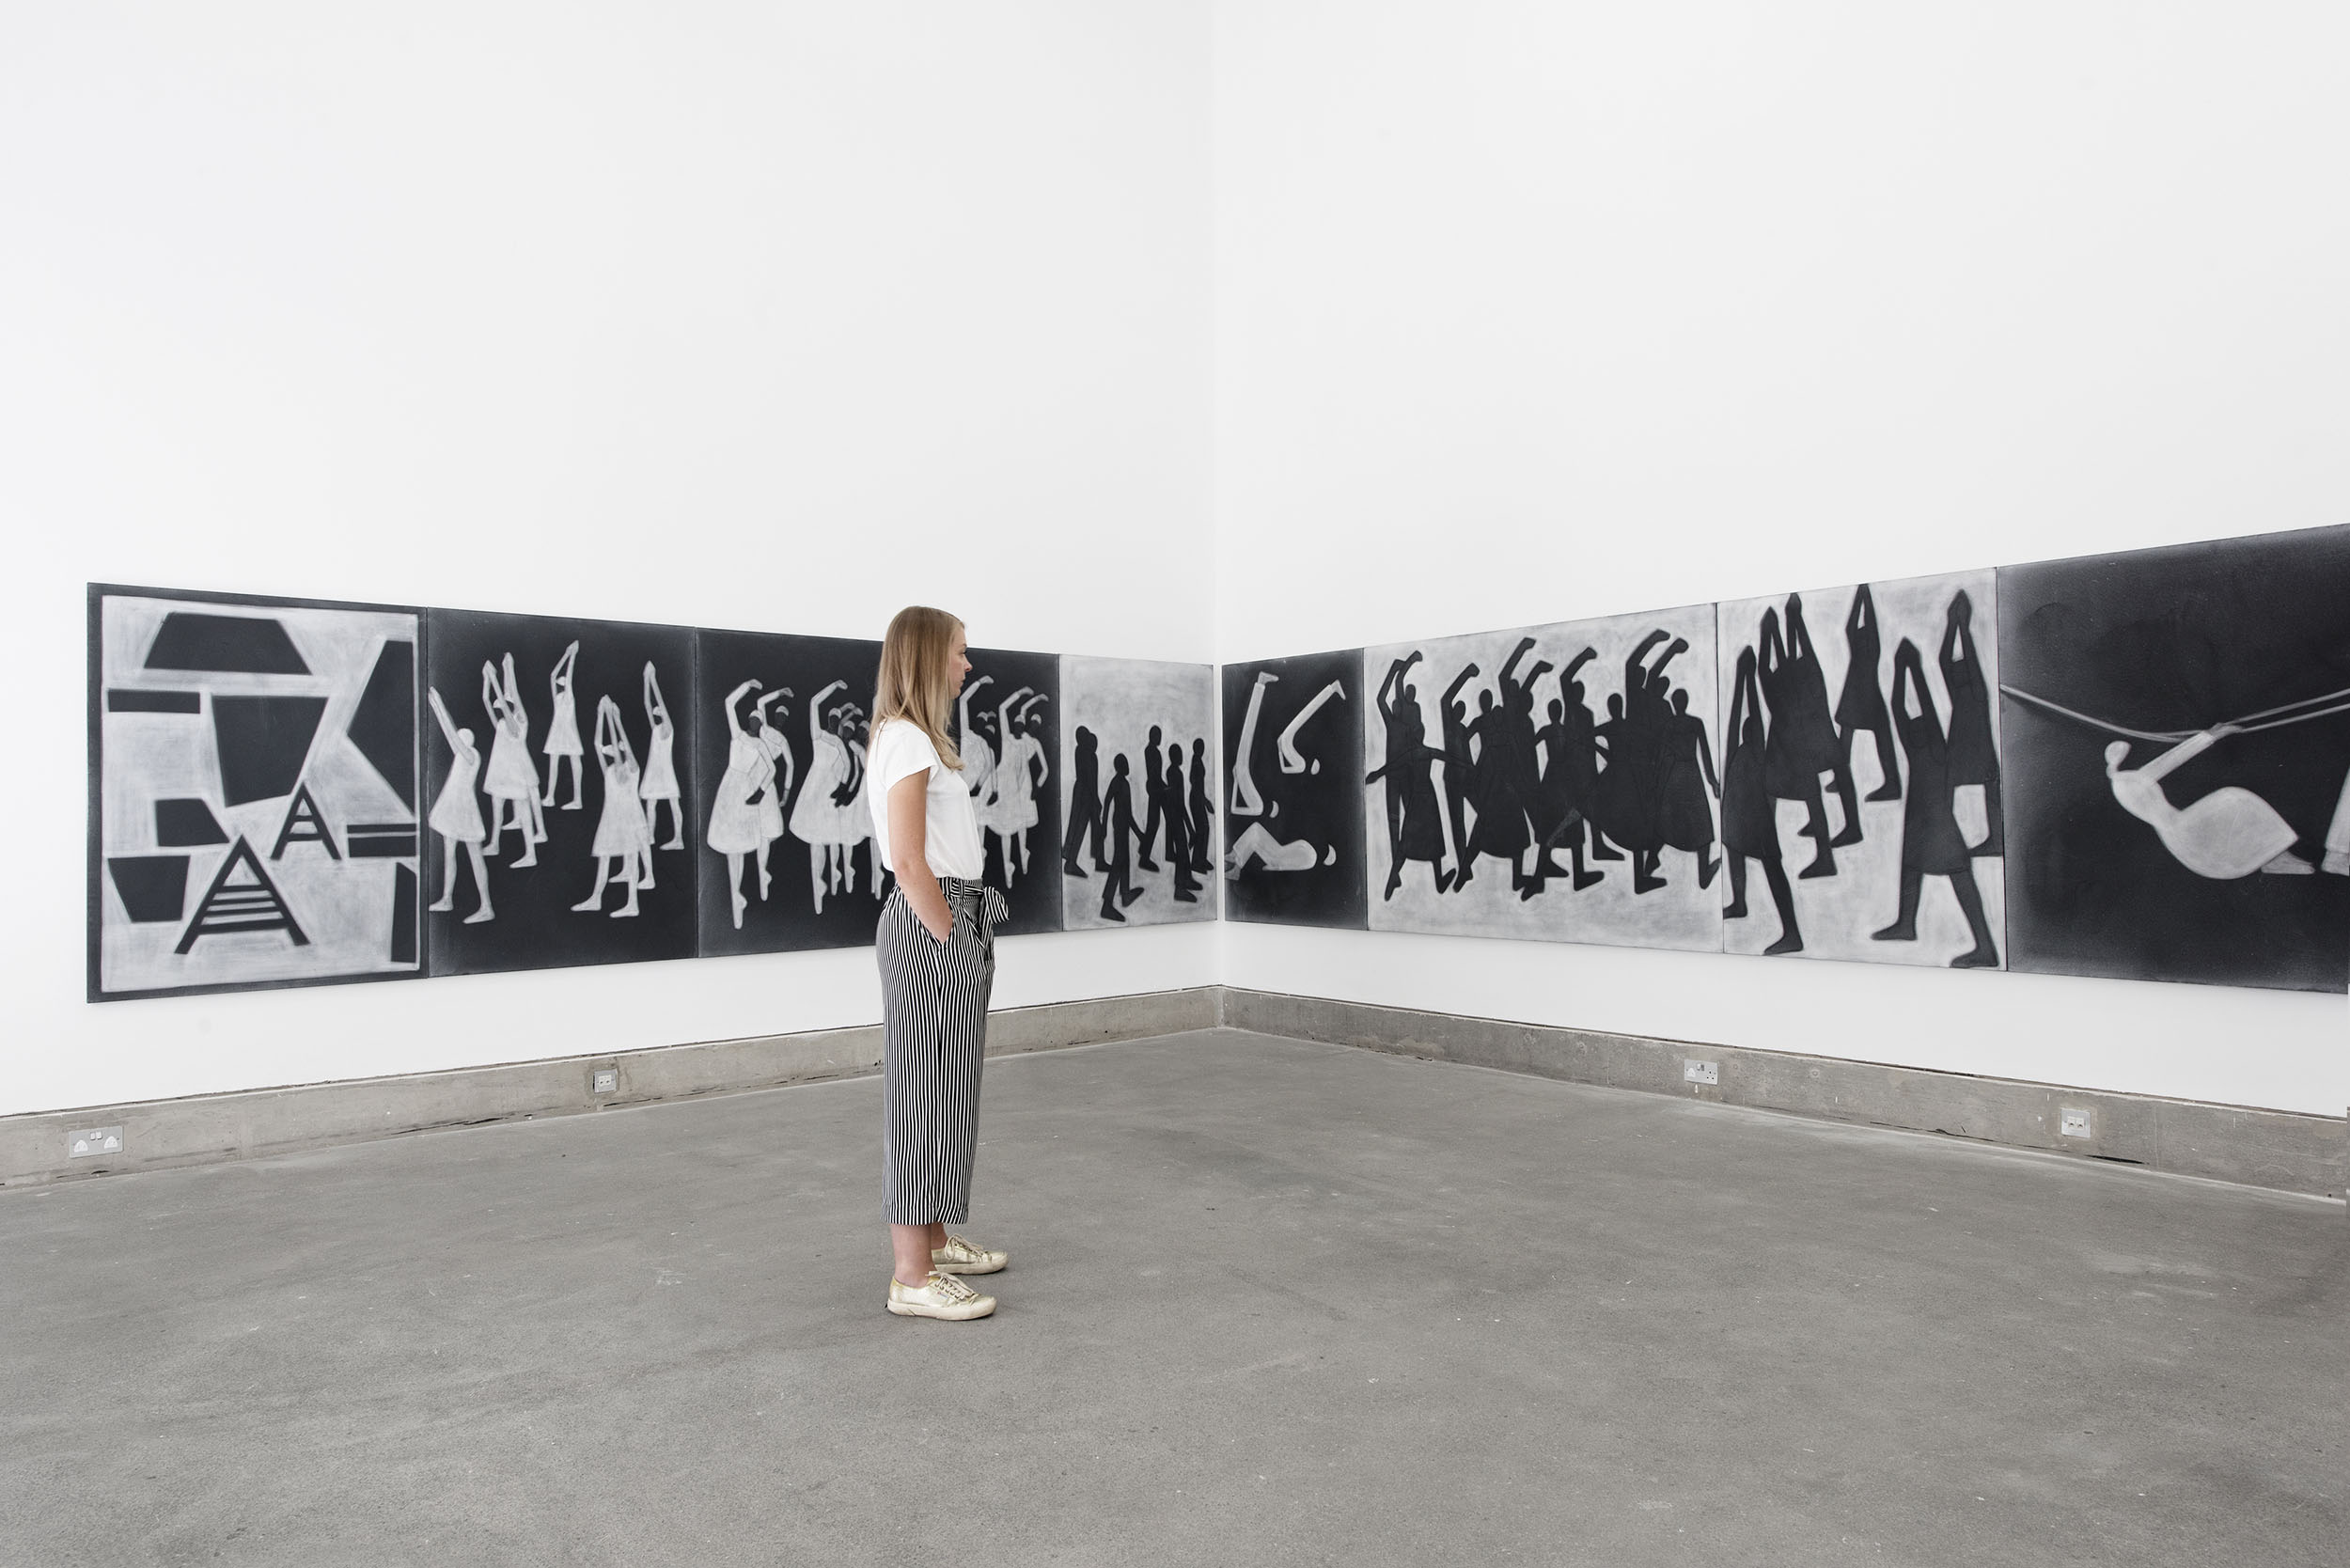 Silke Otto-Knapp, ''A series of images following one from the other (Eine aufeinander folgende Reihe von Bildern),'' 2018. Installation view at Bluecoat. Photo: Thierry Bal